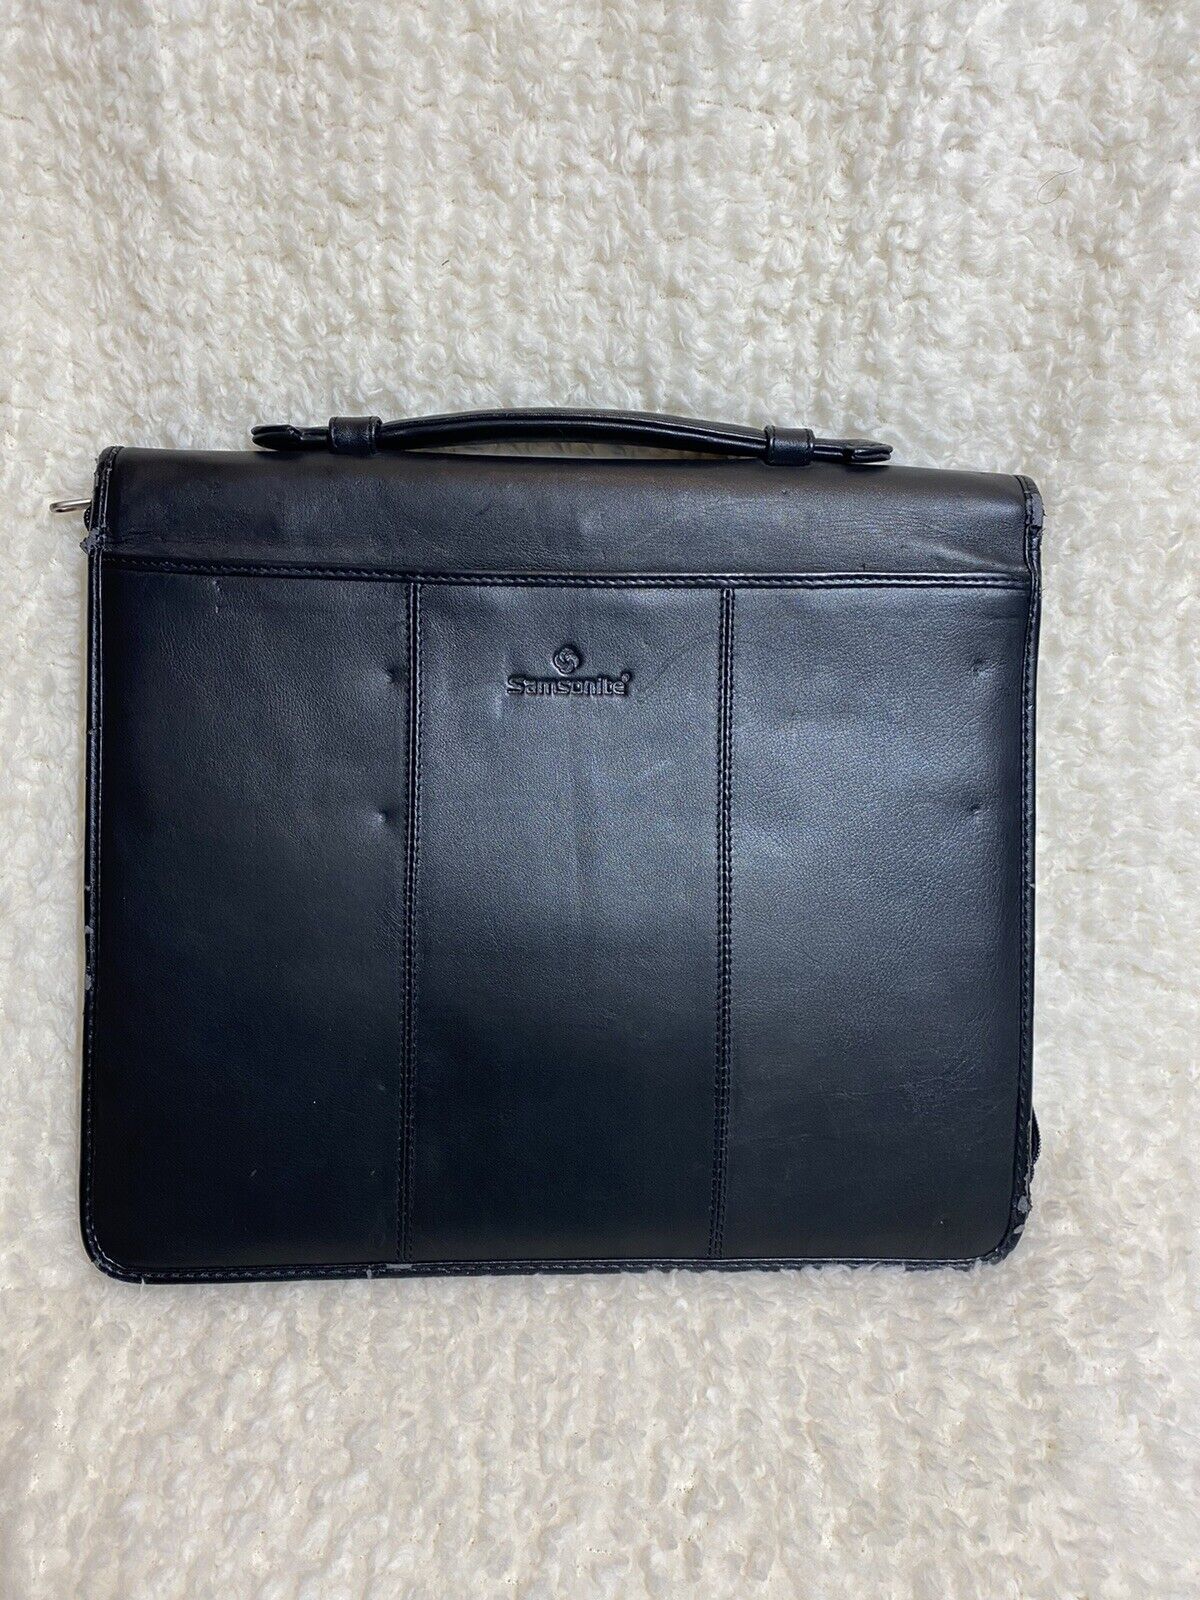 SAMSONITE 1910 Luggage Black Briefcase Case Laptop Bag Leather Soft Carry  On 13